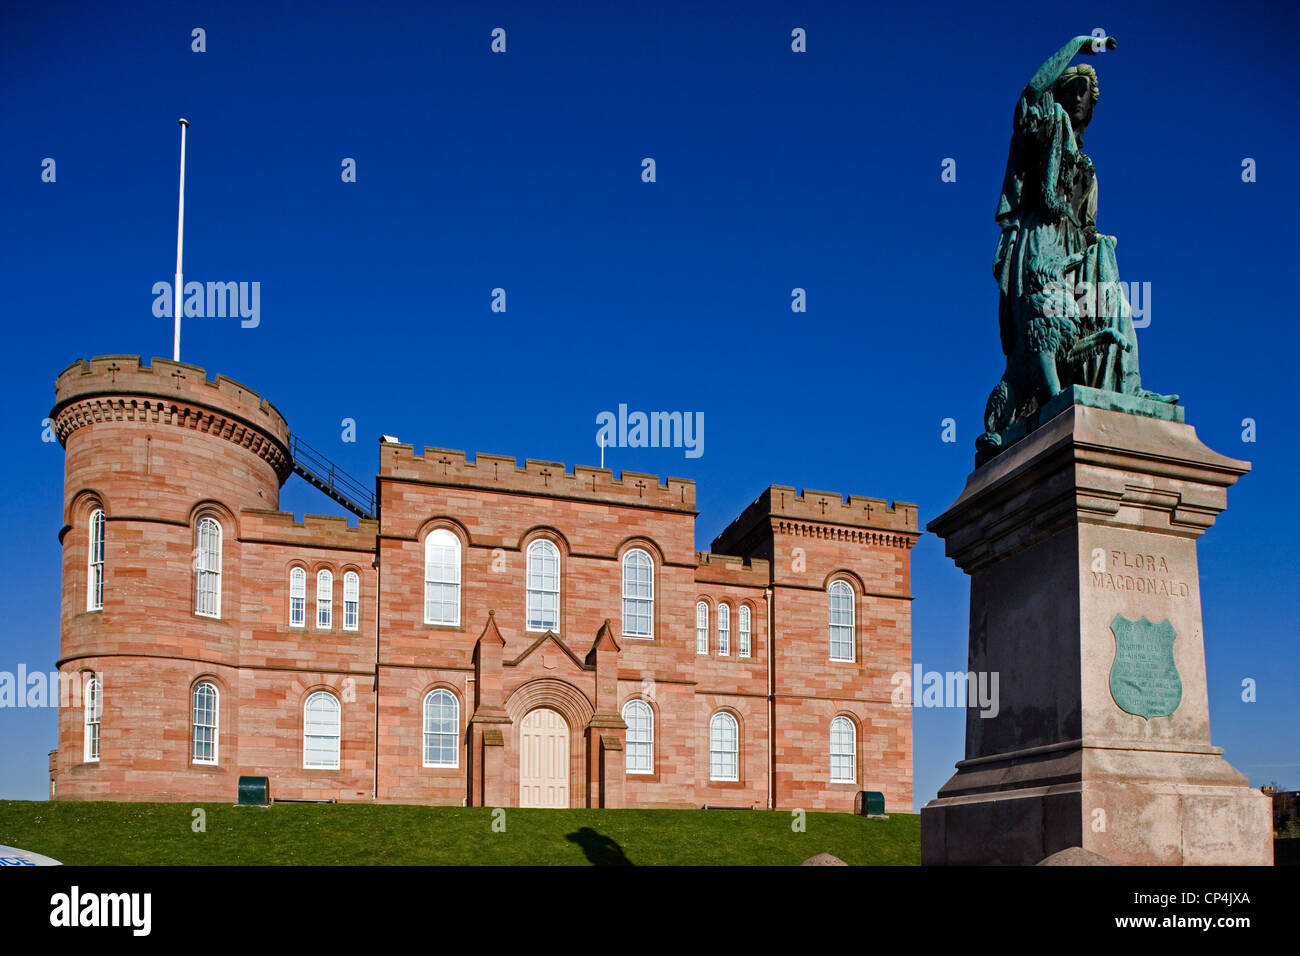 United Kingdom - Scotland - Iverness. The Castle Hill (architect William Burn, 1833-35) and the Flora McDonald's Memorial. Stock Photo